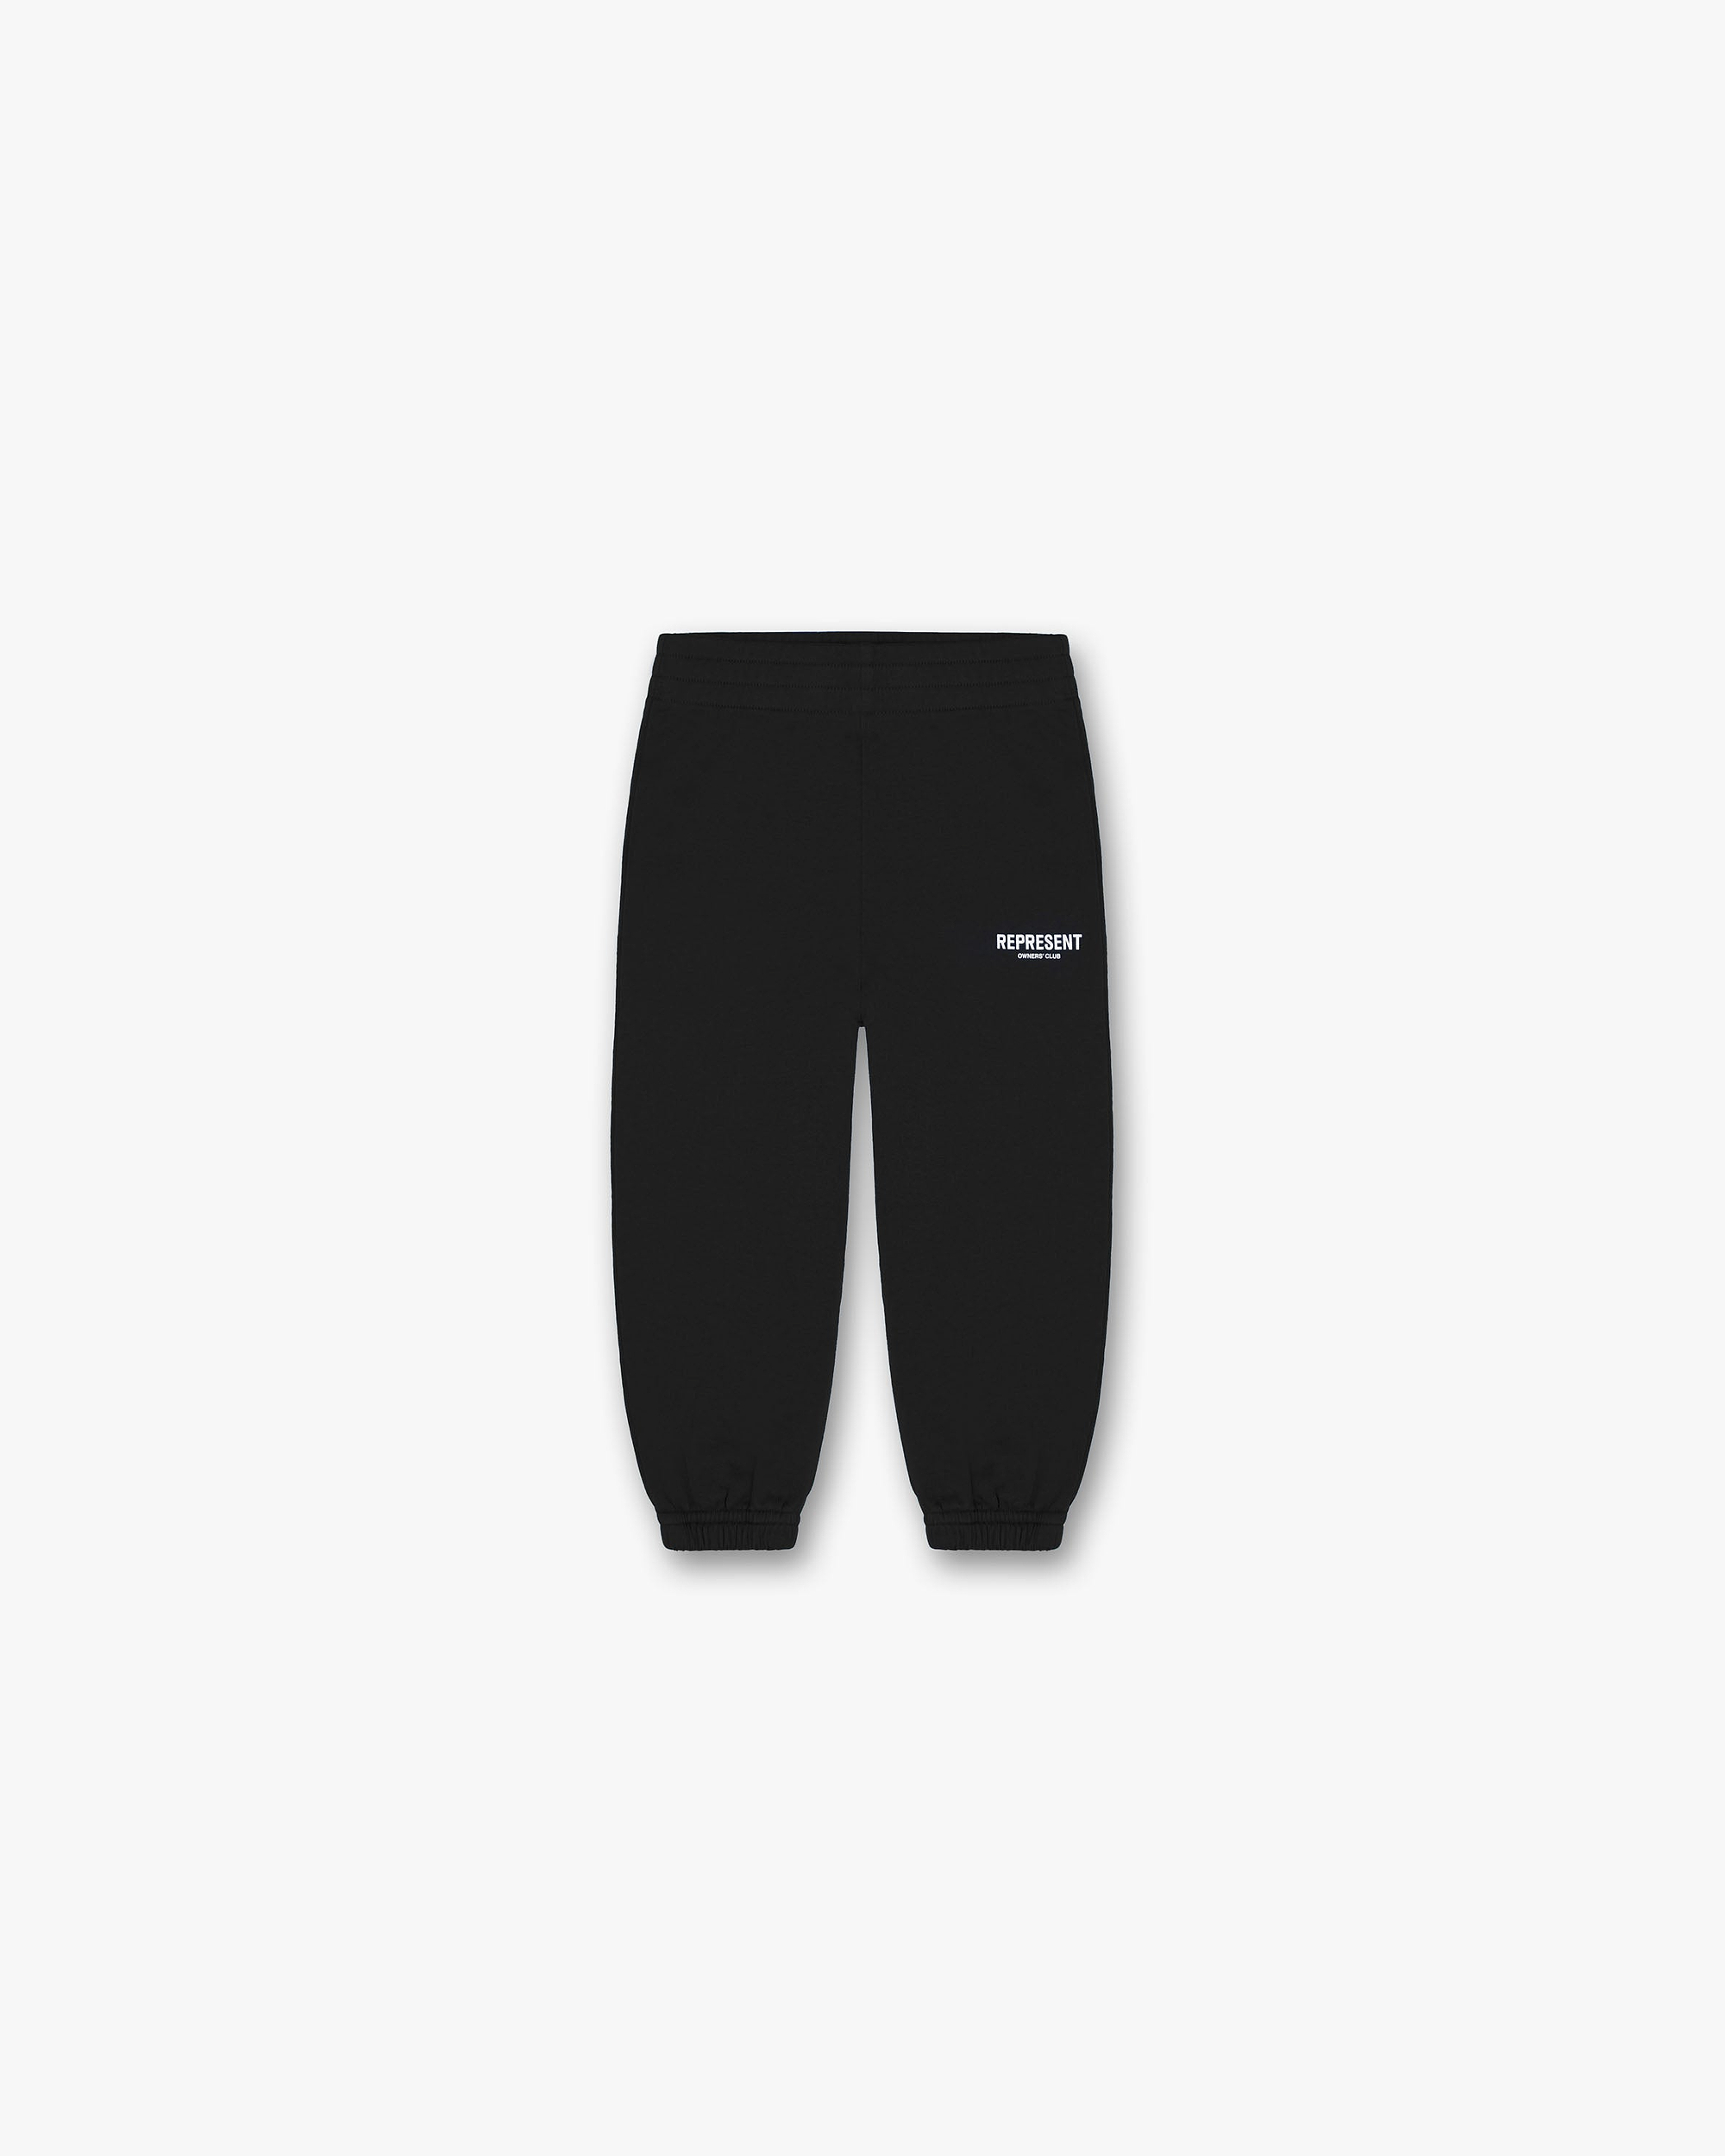 Represent Mini Owners Club Sweatpants | Black Pants Owners Club | Represent Clo